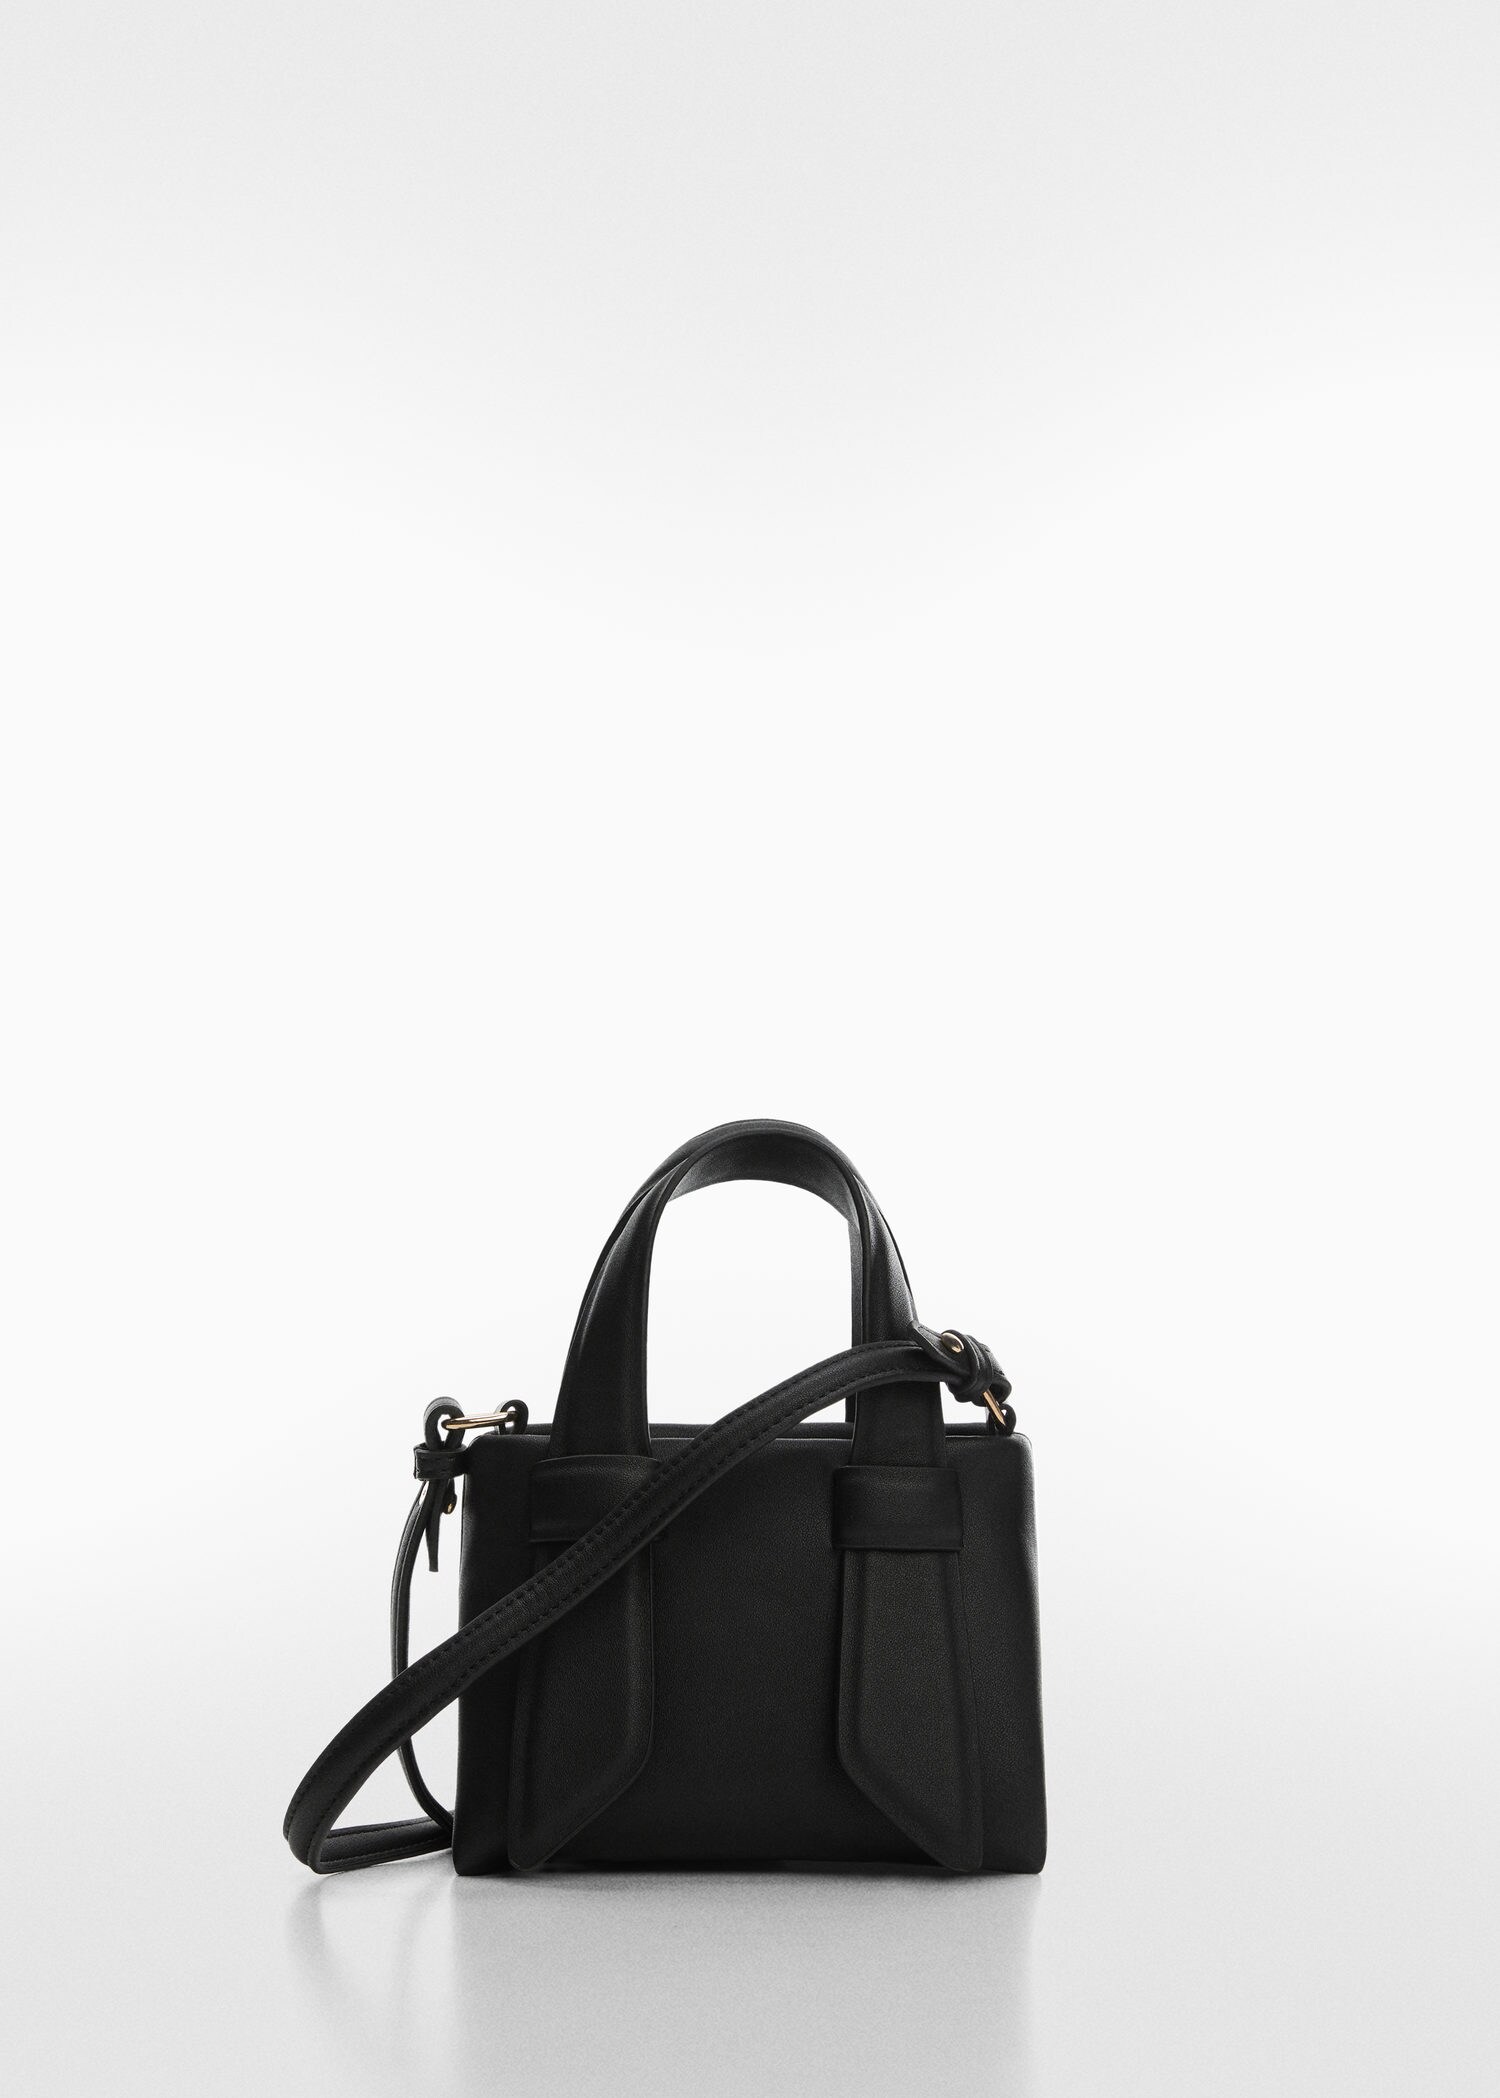 Bucket Bag, Straw Crossbody Bag, Handbag Purse, Woven Bag with Wooden  handles - Shop ReleafStore Handbags & Totes - Pinkoi